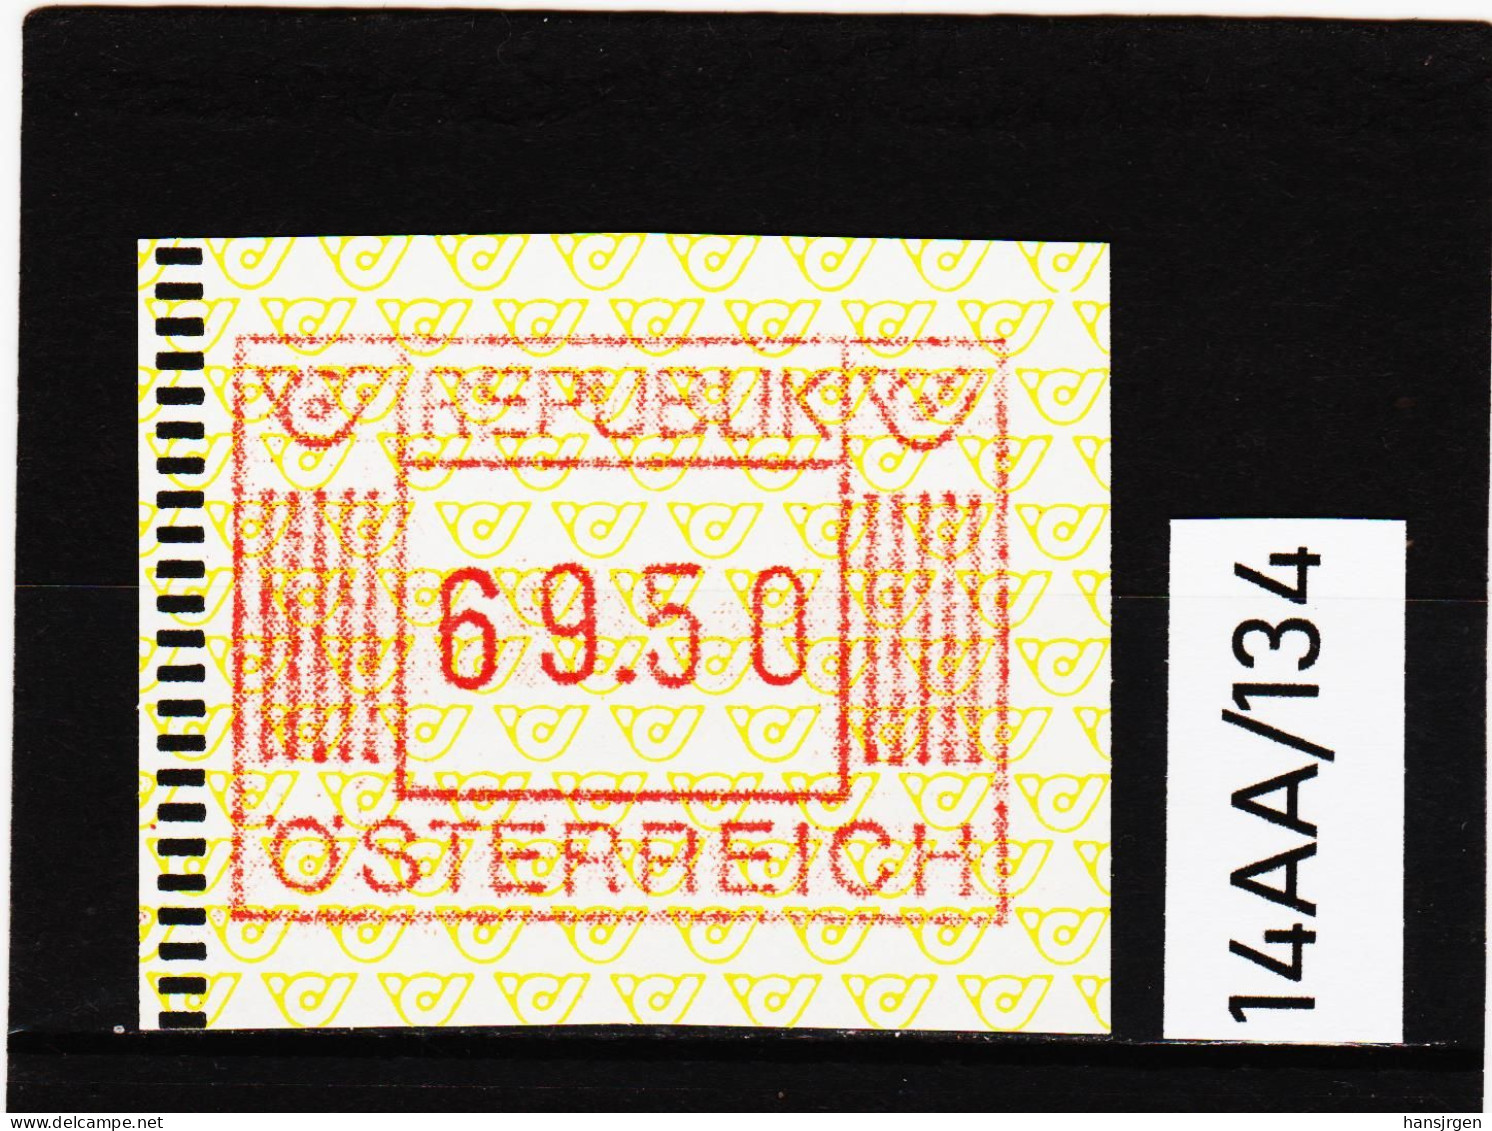 14AA/134  ÖSTERREICH 1983 AUTOMATENMARKEN  A N K  1. AUSGABE  69,50 SCHILLING   ** Postfrisch - Timbres De Distributeurs [ATM]